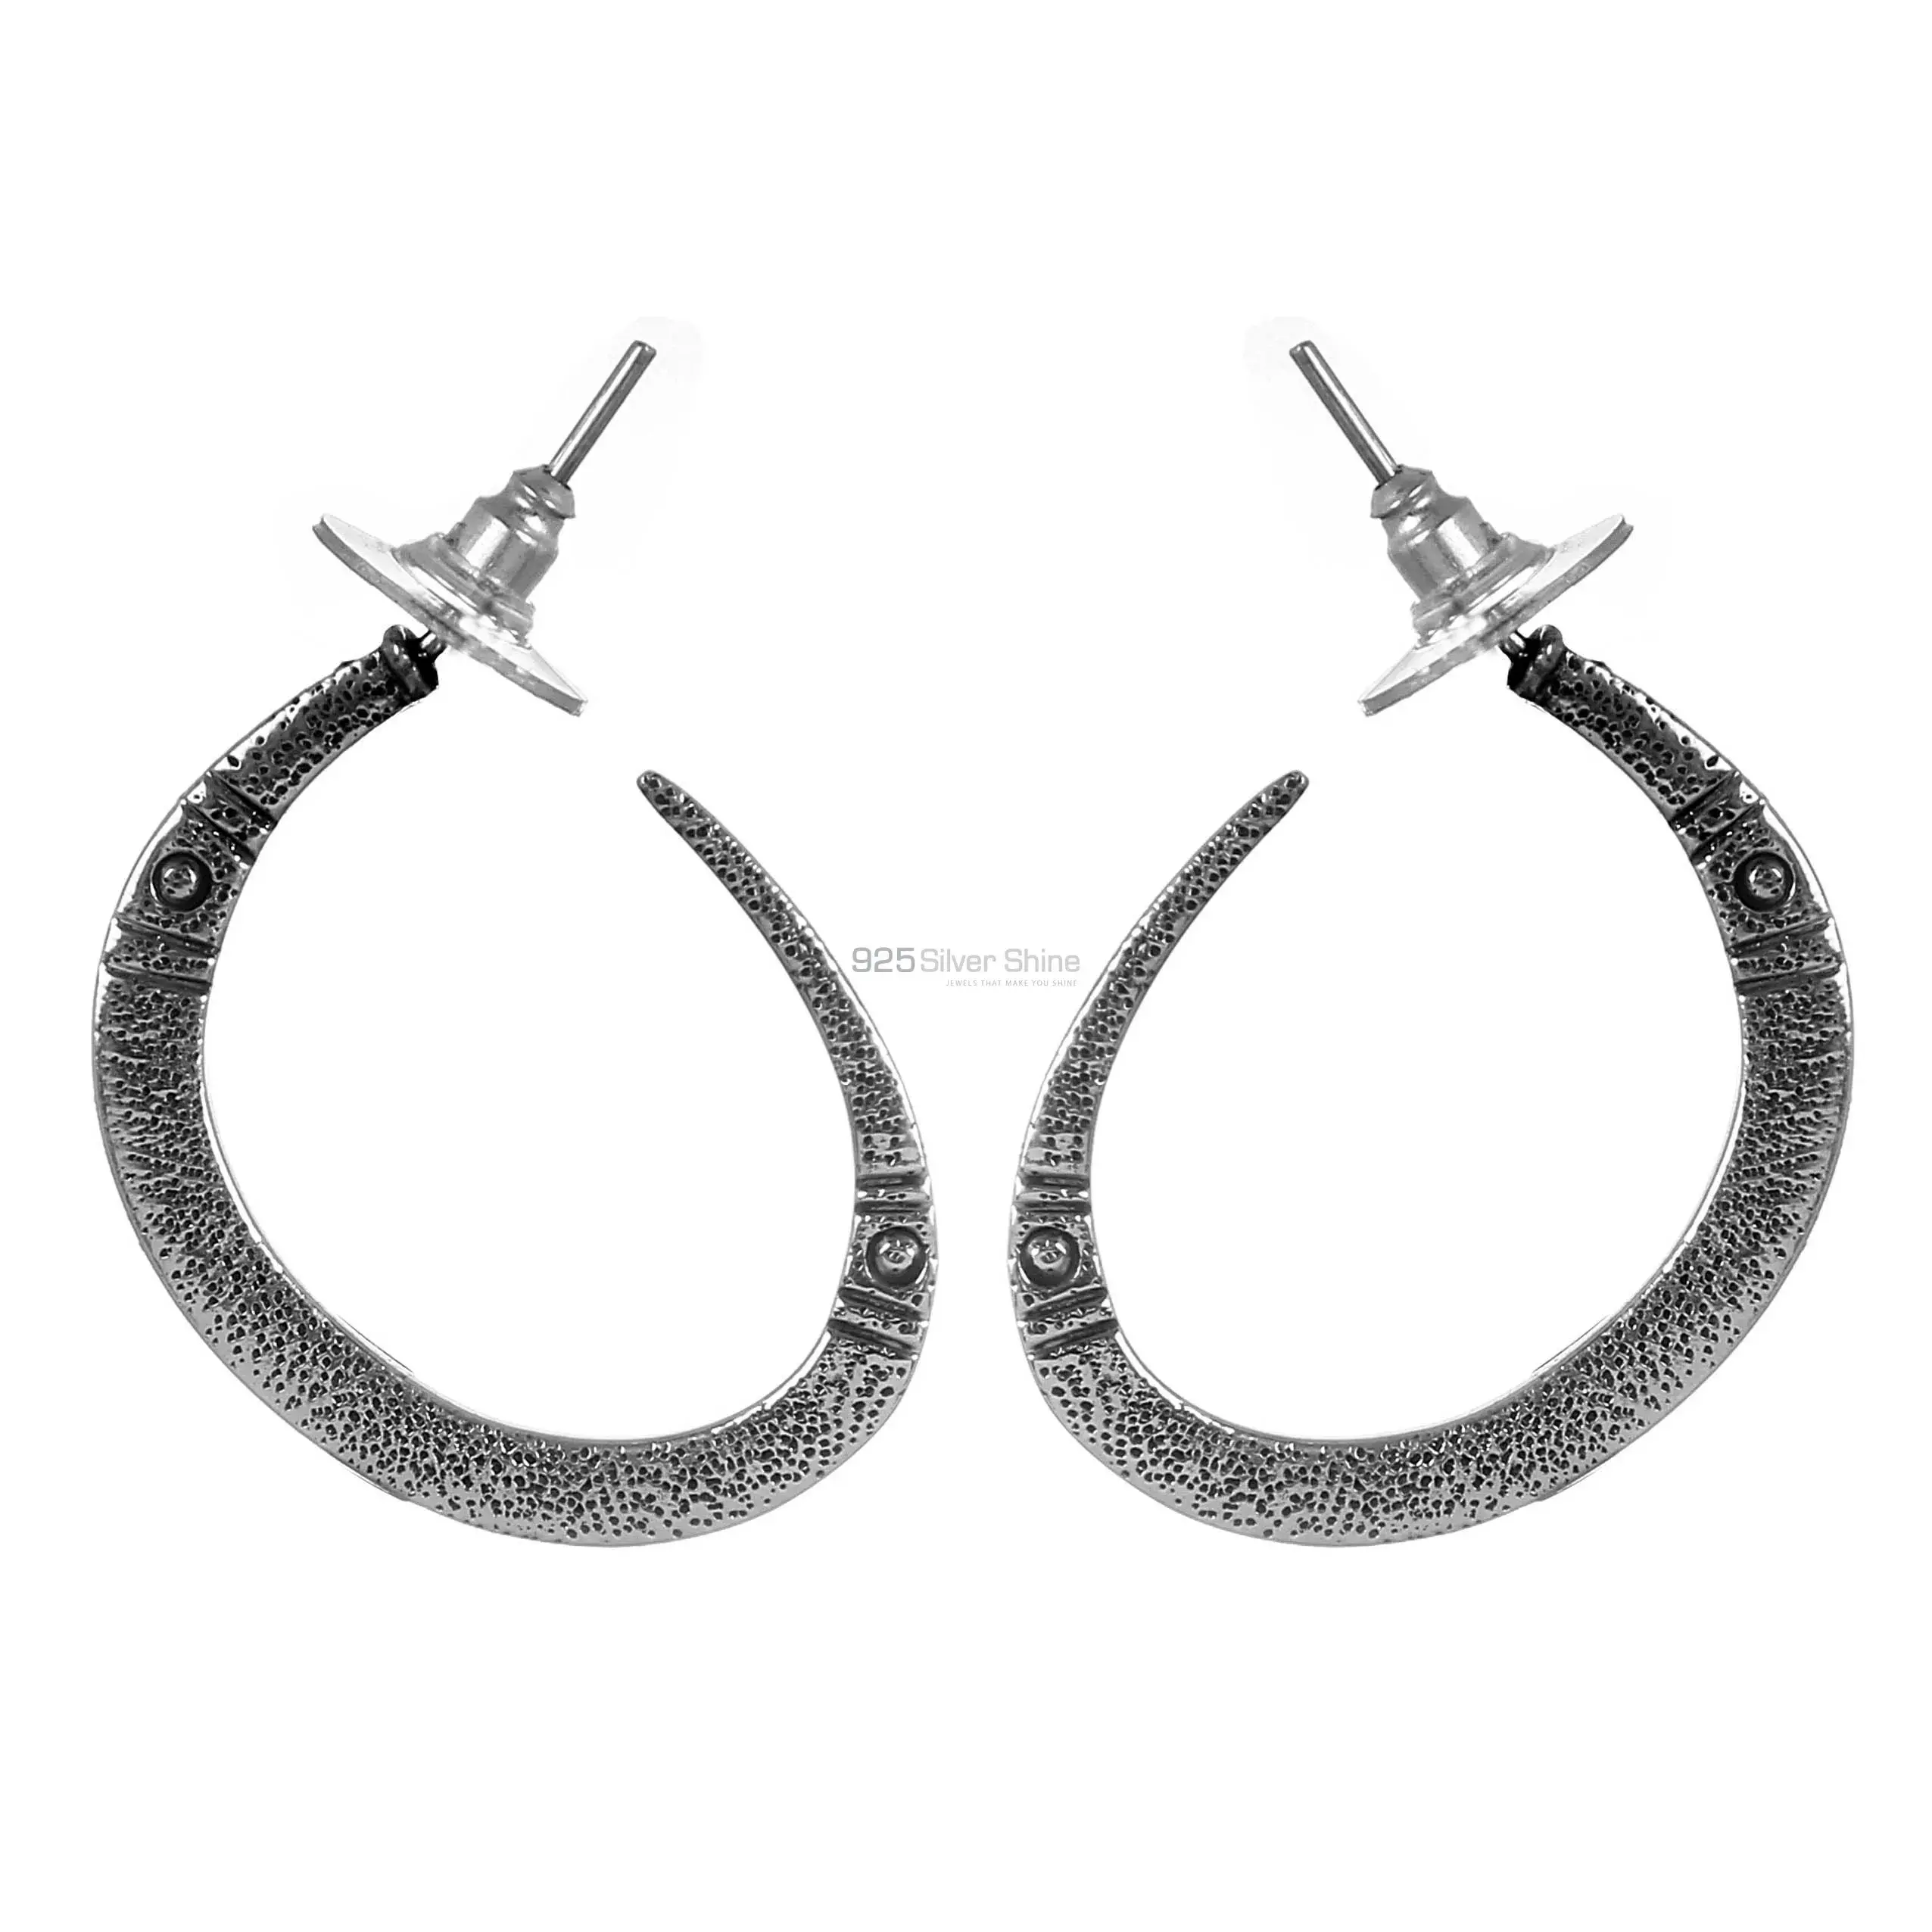 Affordable 925 Sterling Silver Earrings Wholesaler 925SE287